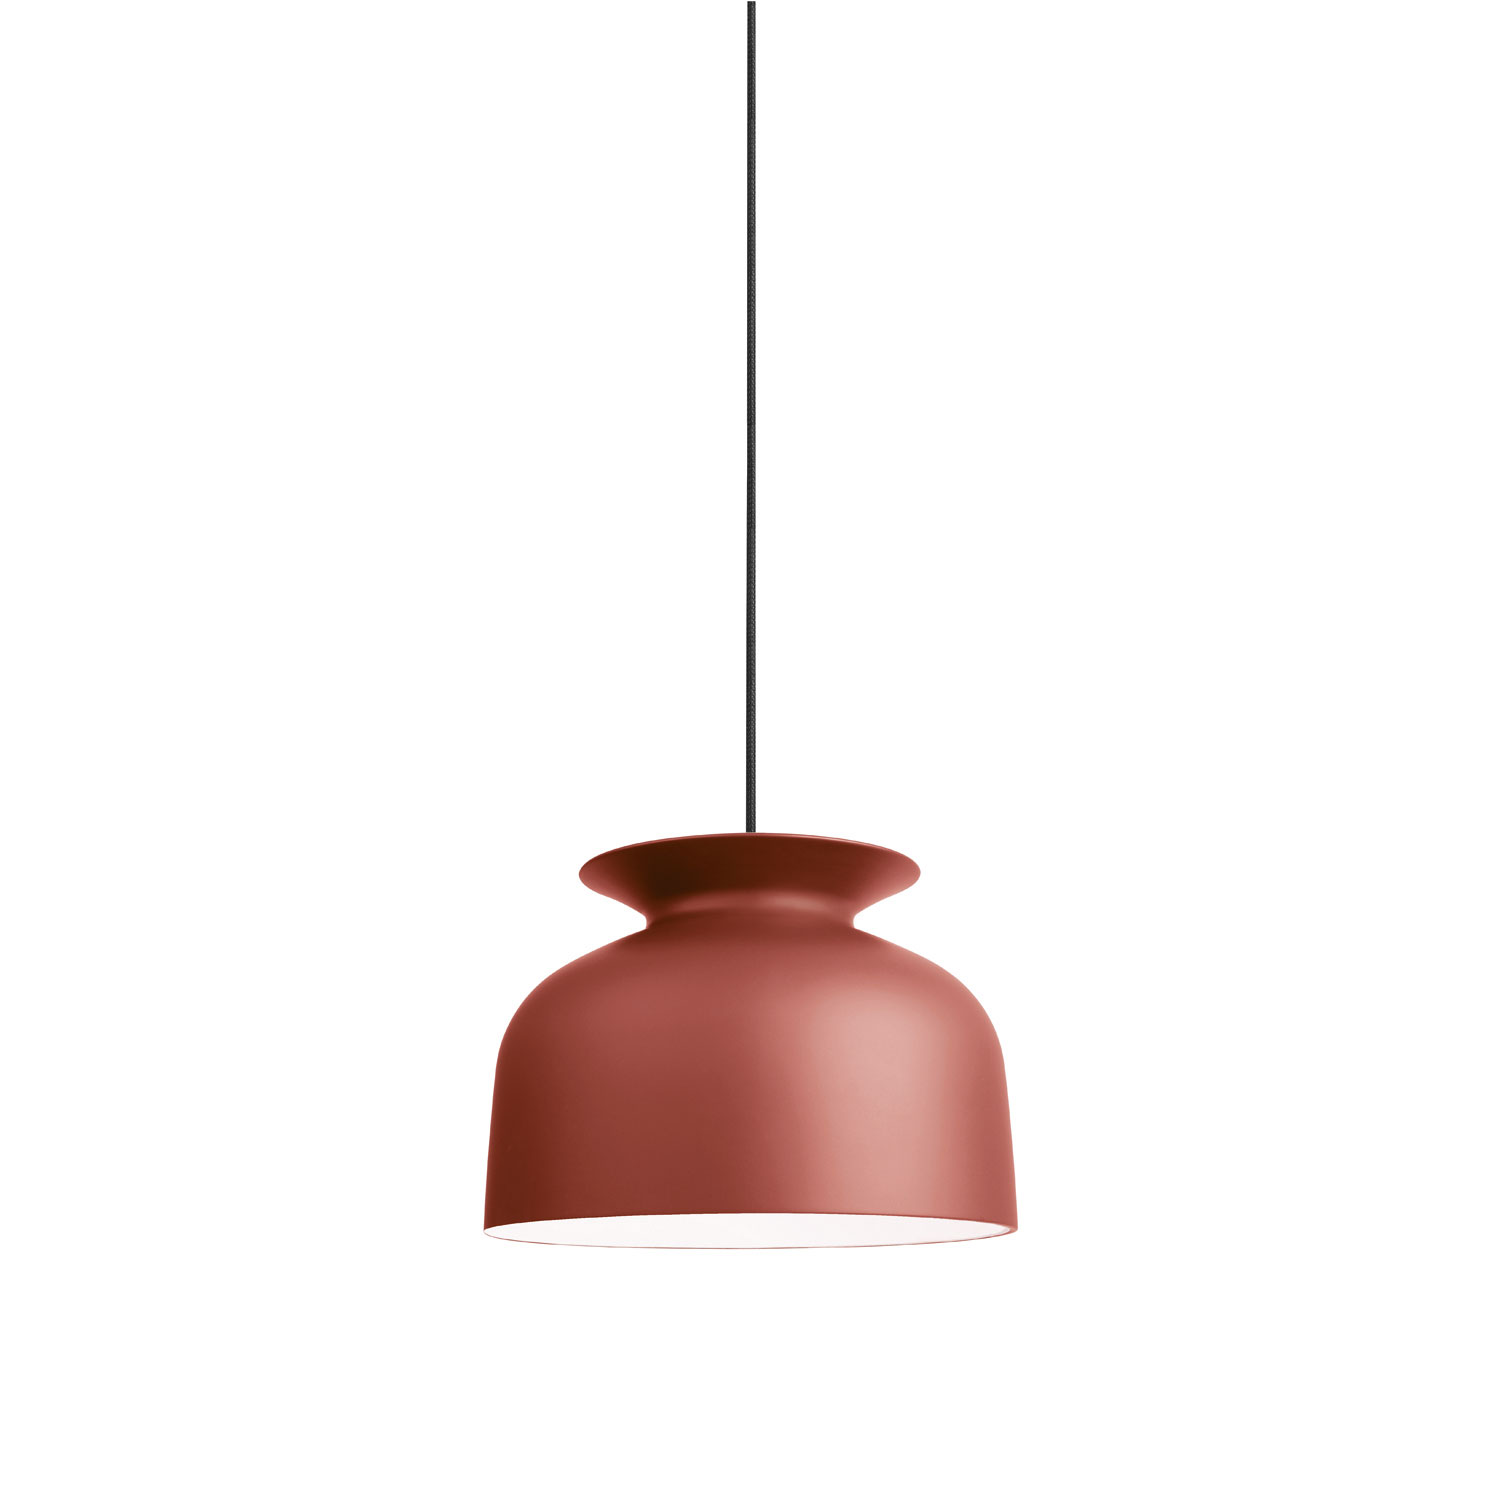 Designer Scandinavian Gubi Ronde Pendant Lamp - Rusty Red